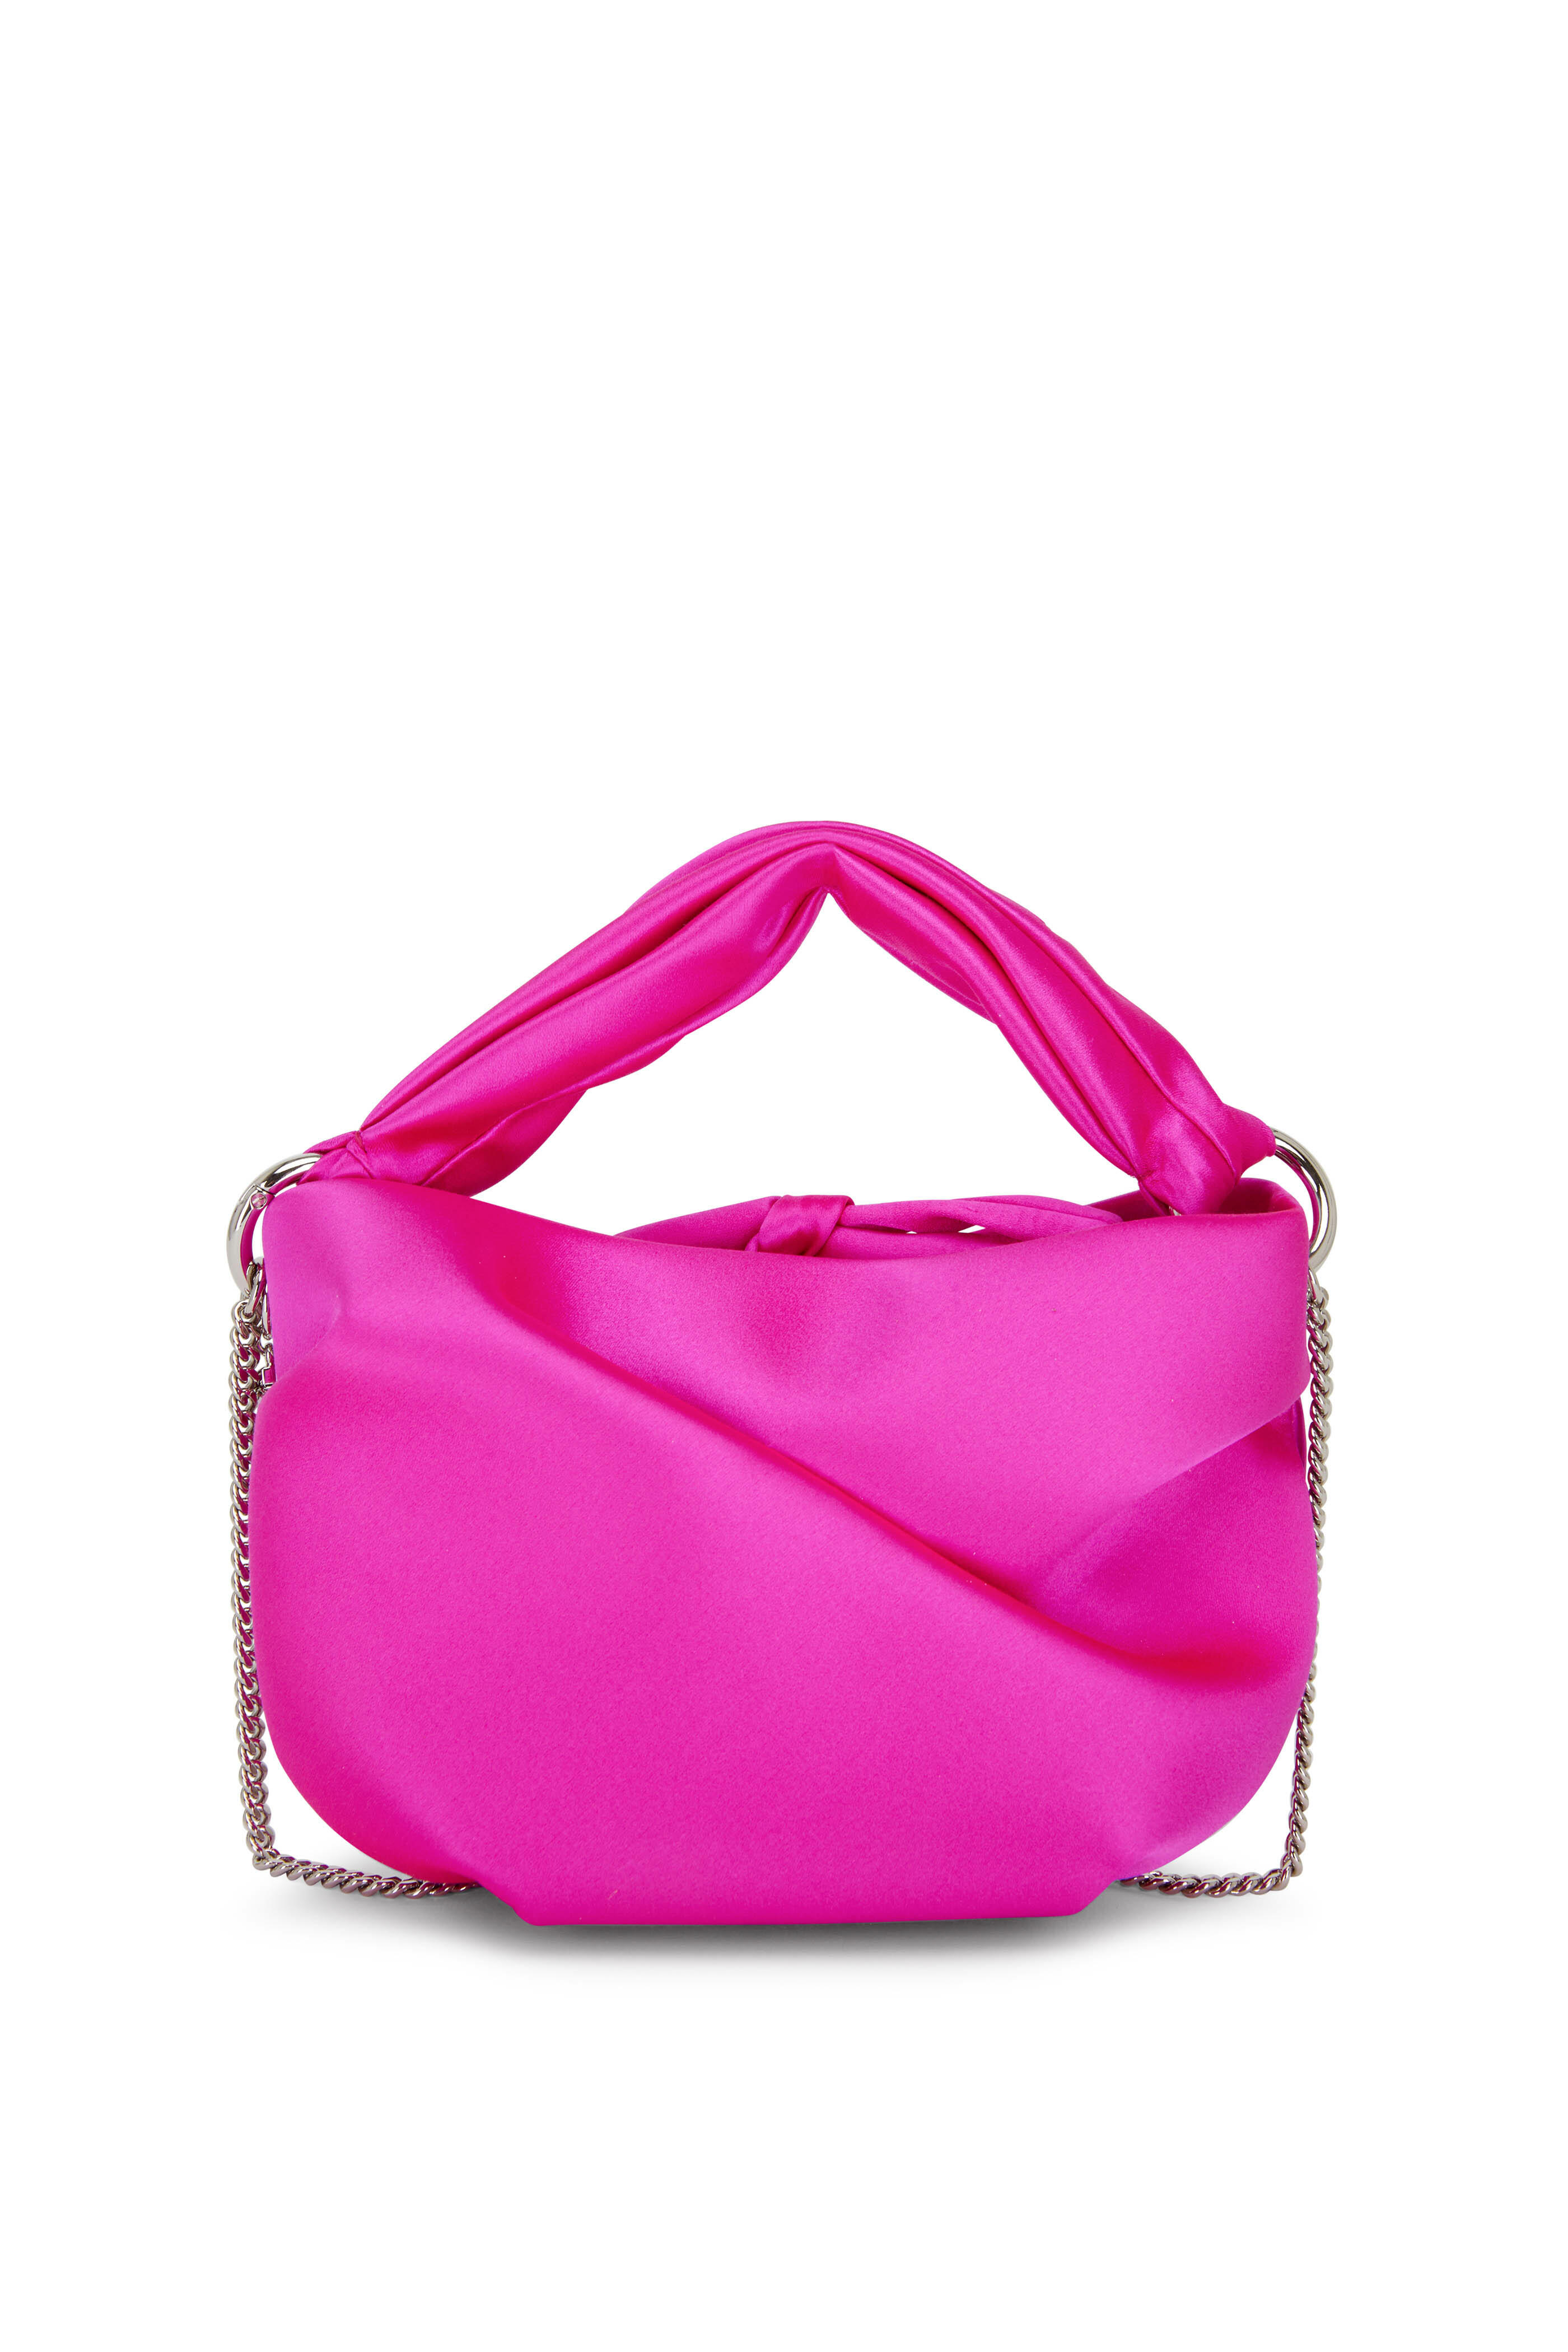 BOHEMIA, Black Pink Avenue Nappa Leather Mini Bag, Summer Collection